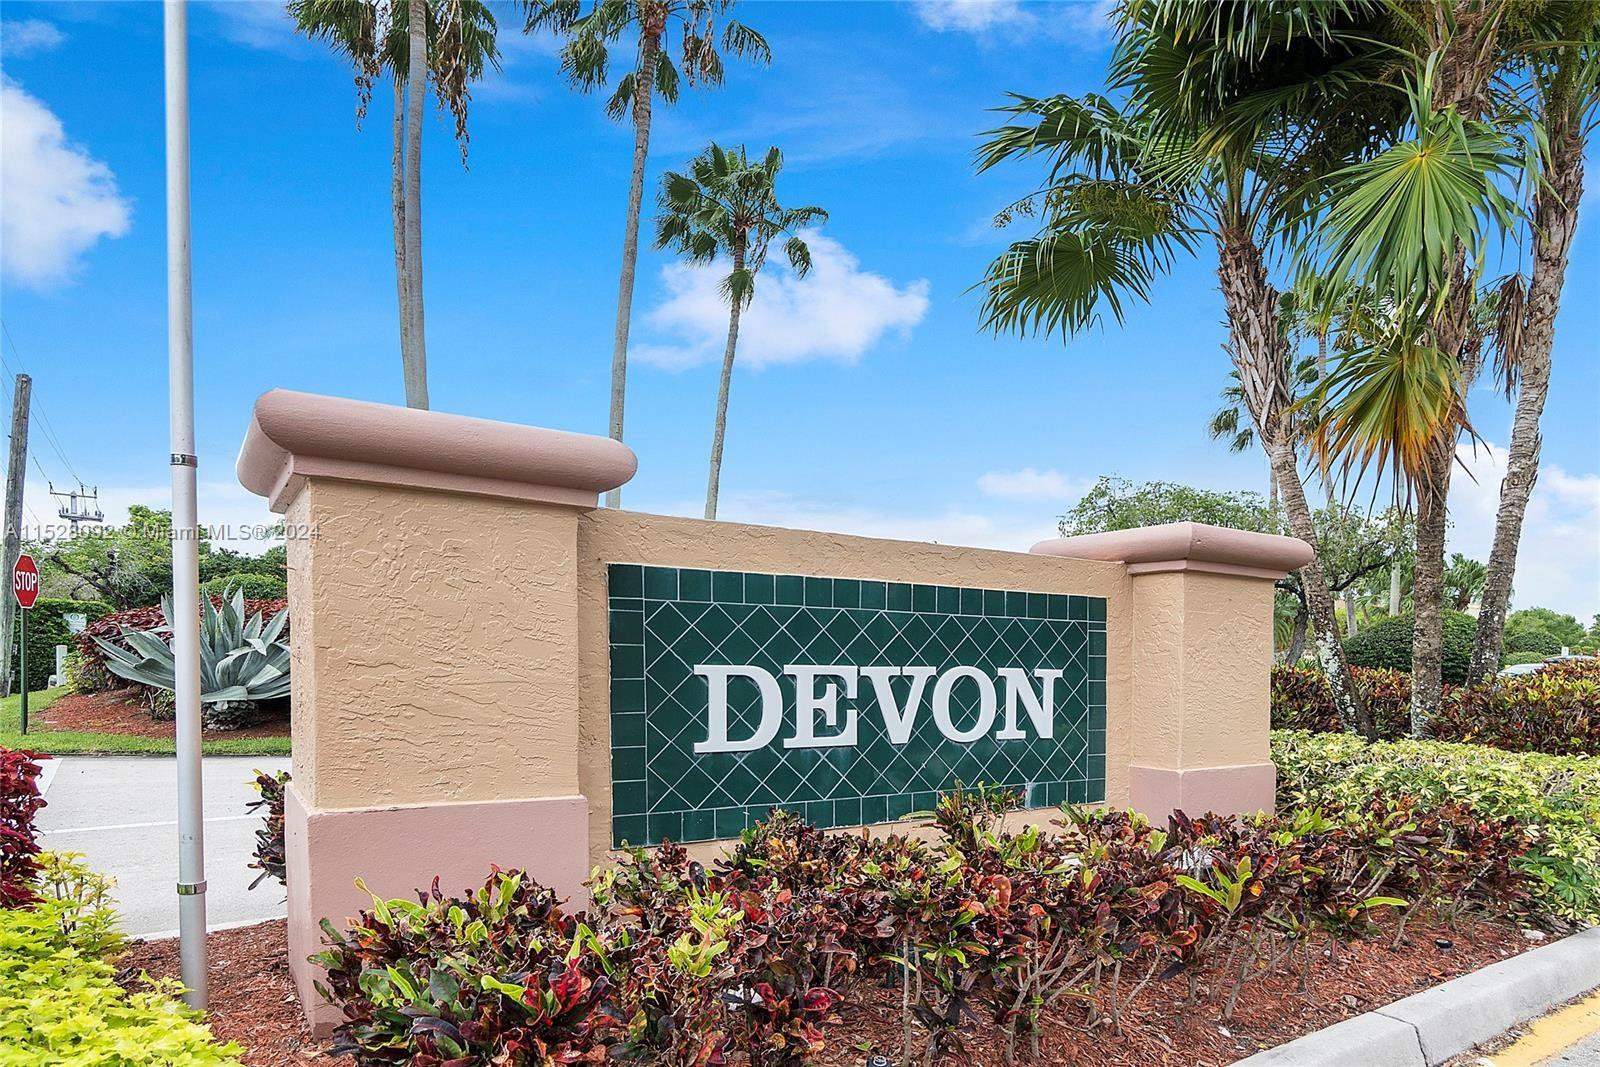 Property for Sale at 7248 S Devon Dr 104, Tamarac, Broward County, Florida - Bedrooms: 2 
Bathrooms: 2  - $219,995